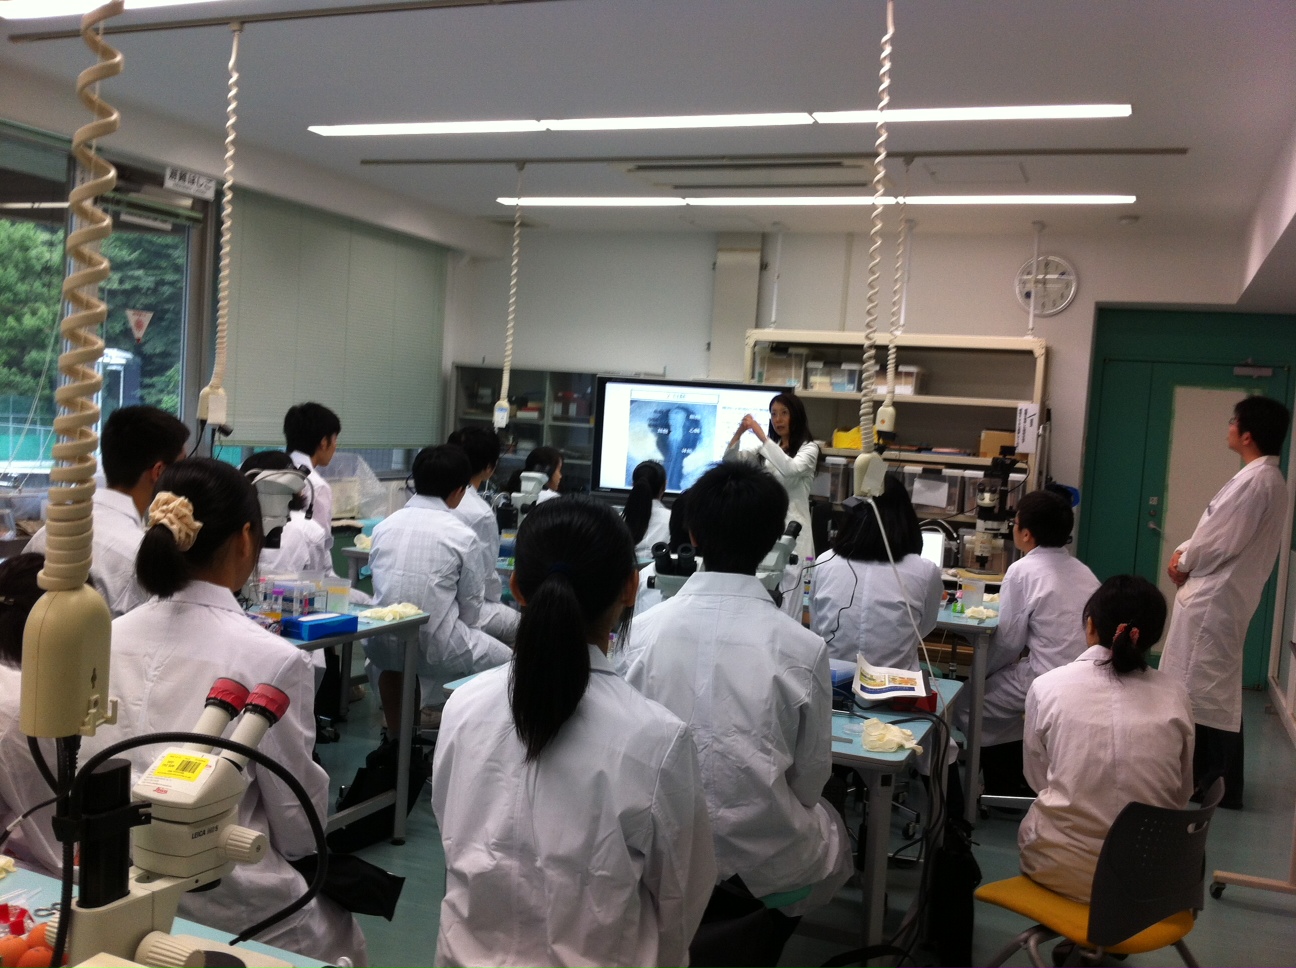 http://www.ige.tohoku.ac.jp/prg/genetics/study_report/upload_items/201307/seminar.JPG